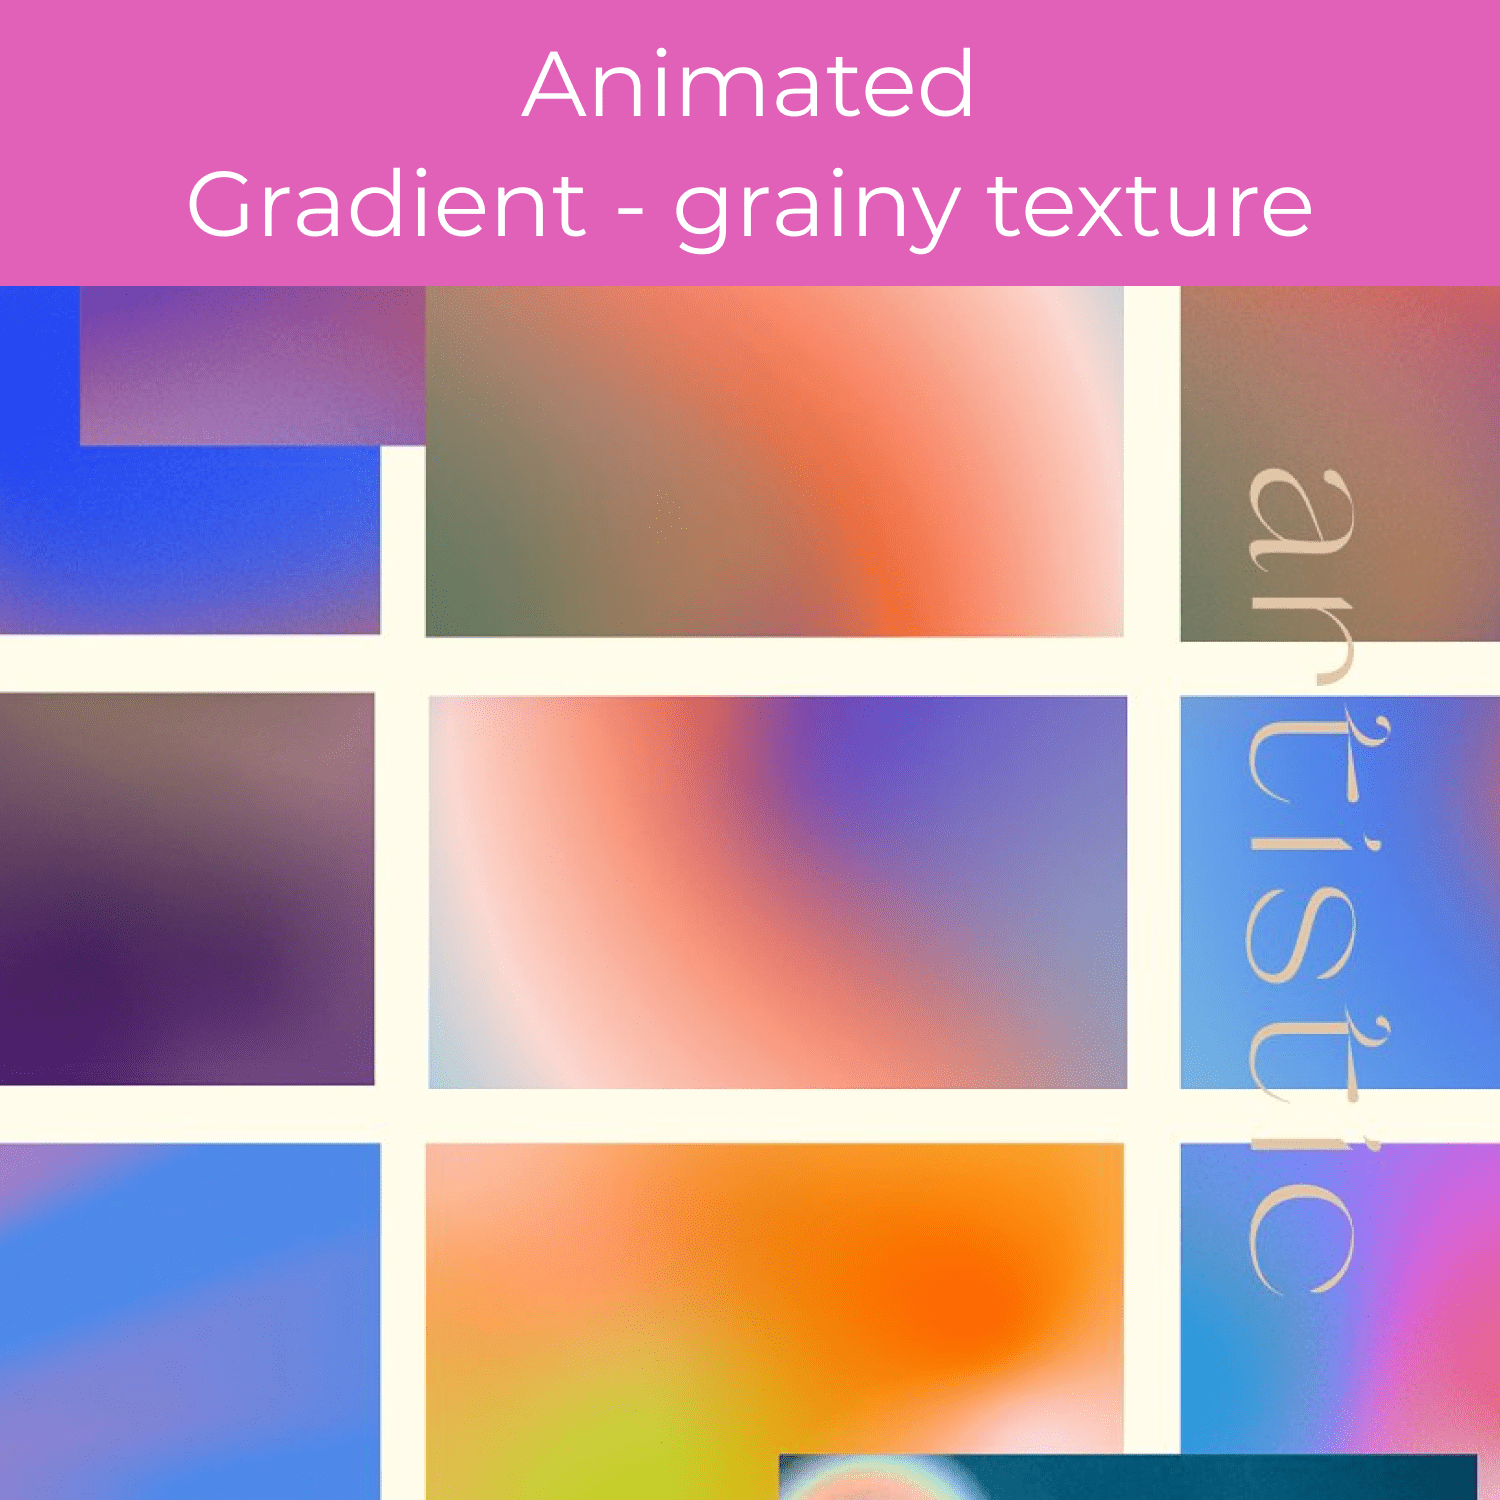 Animated Gradient - Grainy Texture cover.